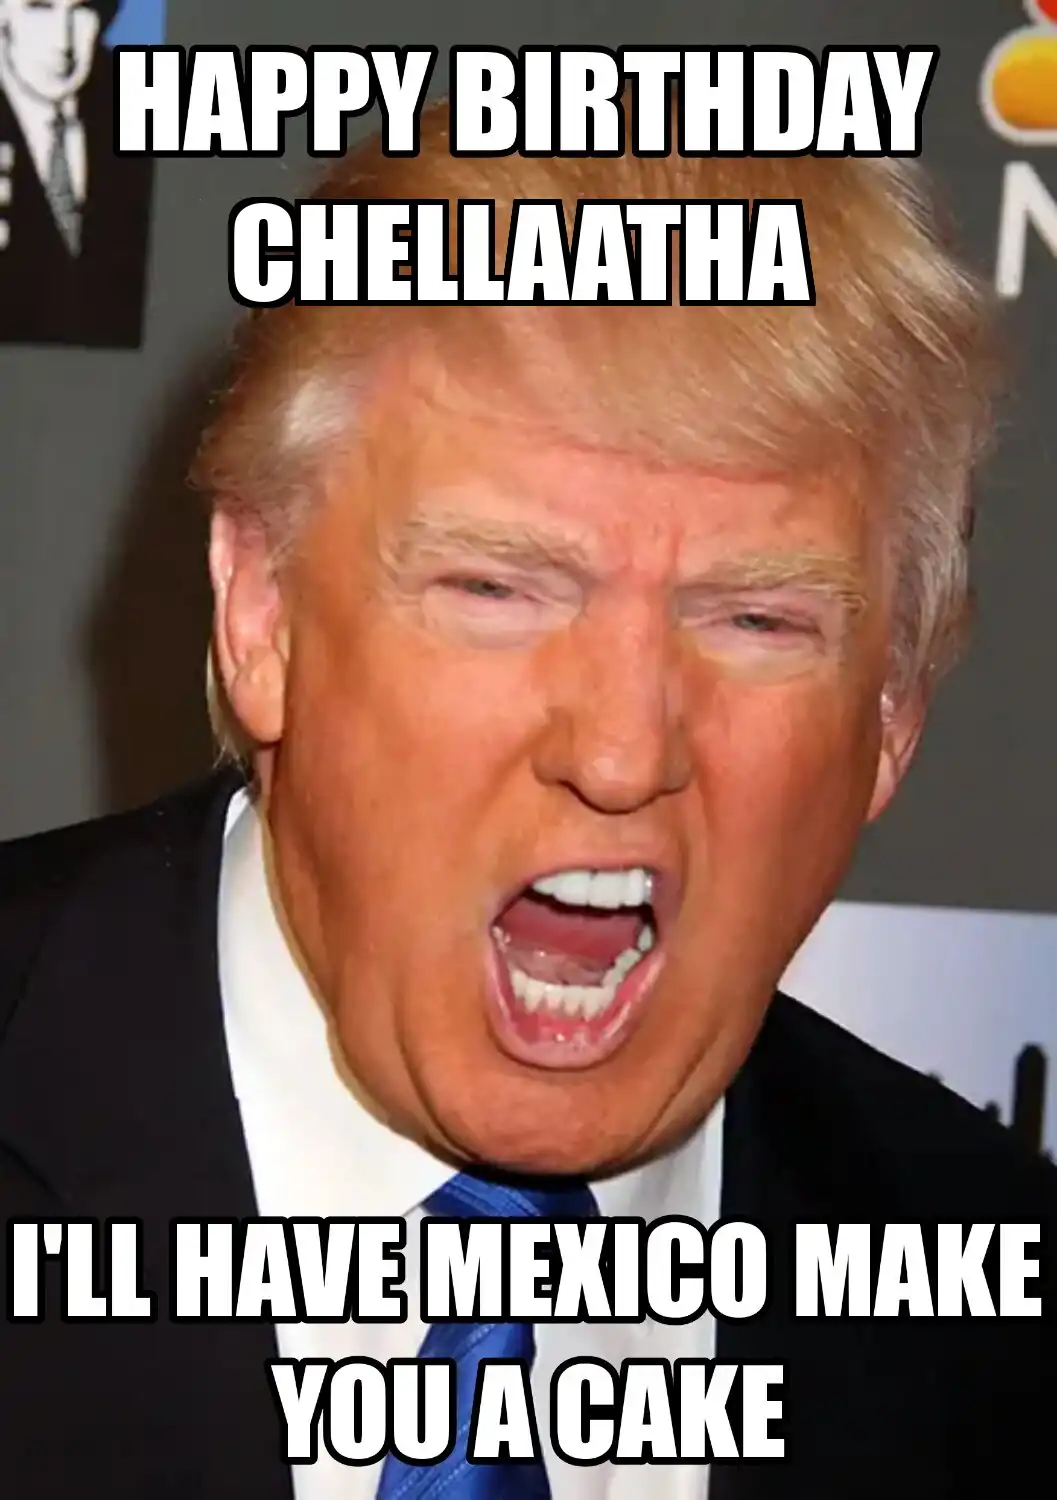 Happy Birthday Chellaatha Mexico Make You A Cake Meme